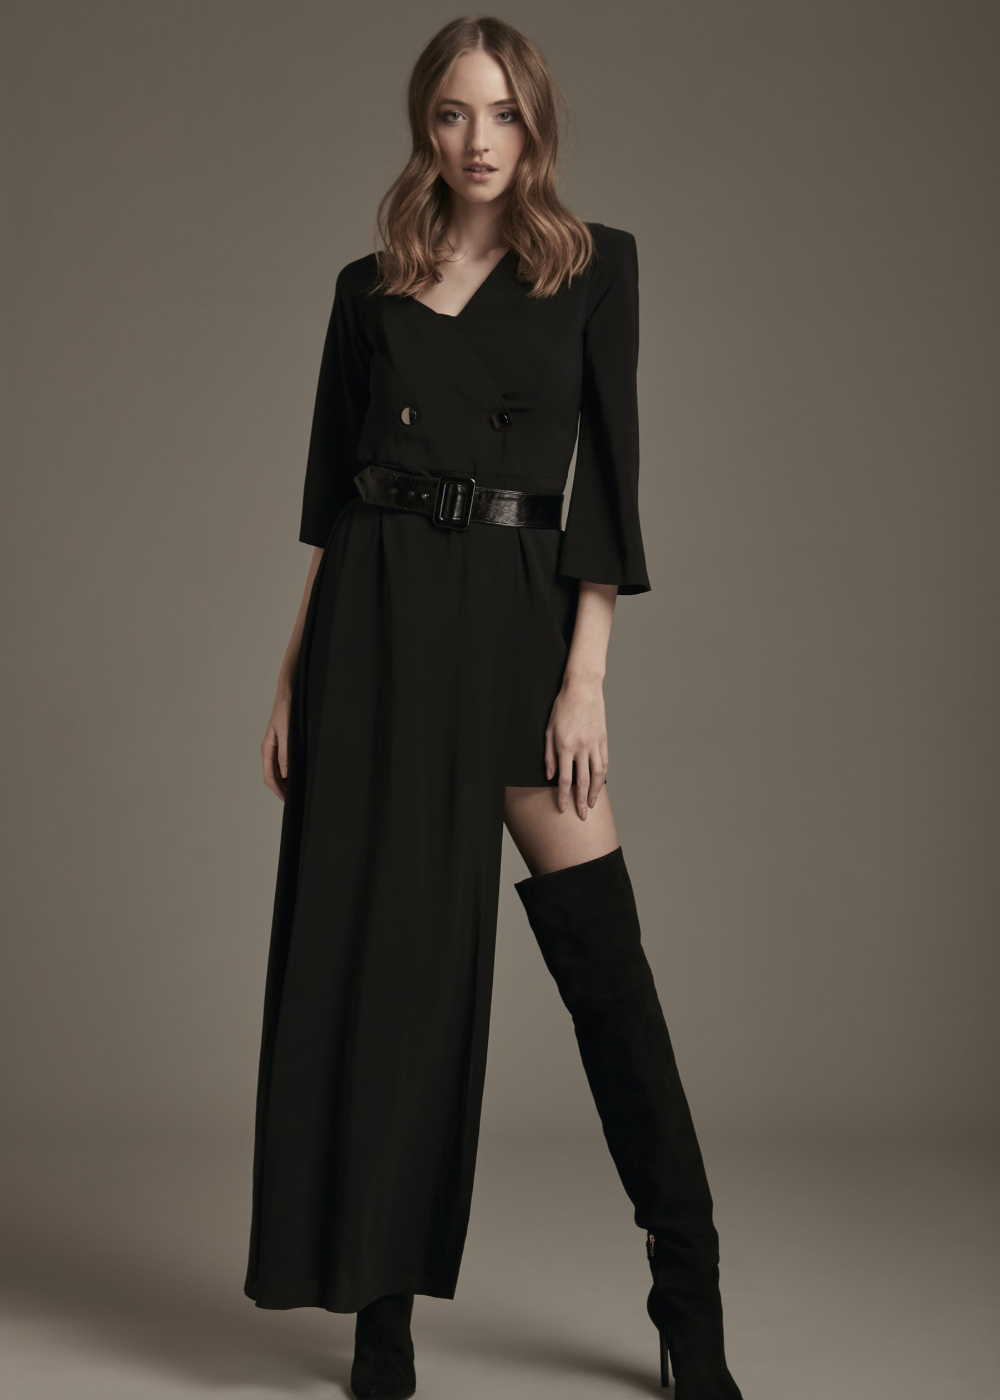 gianni di Leo - news & fashion - Innovative black dress